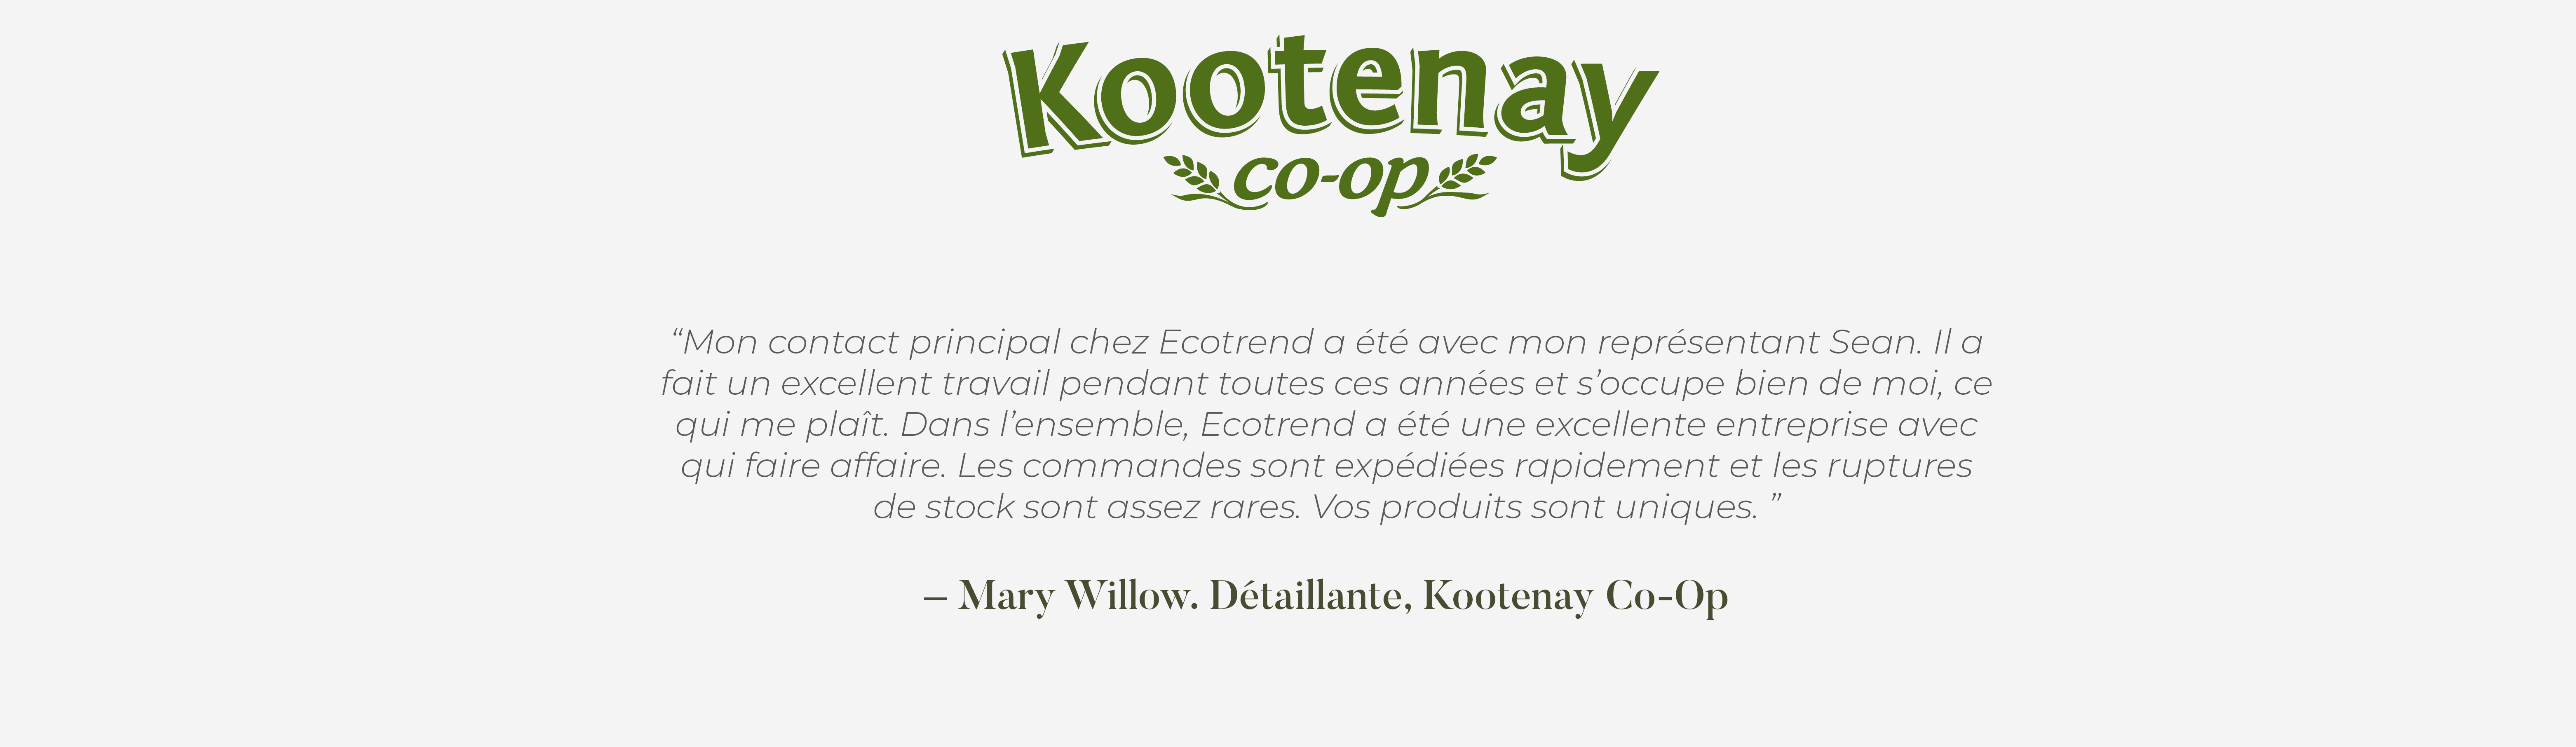 Mary Willow Retailer at Kootenay Coop Testimonial